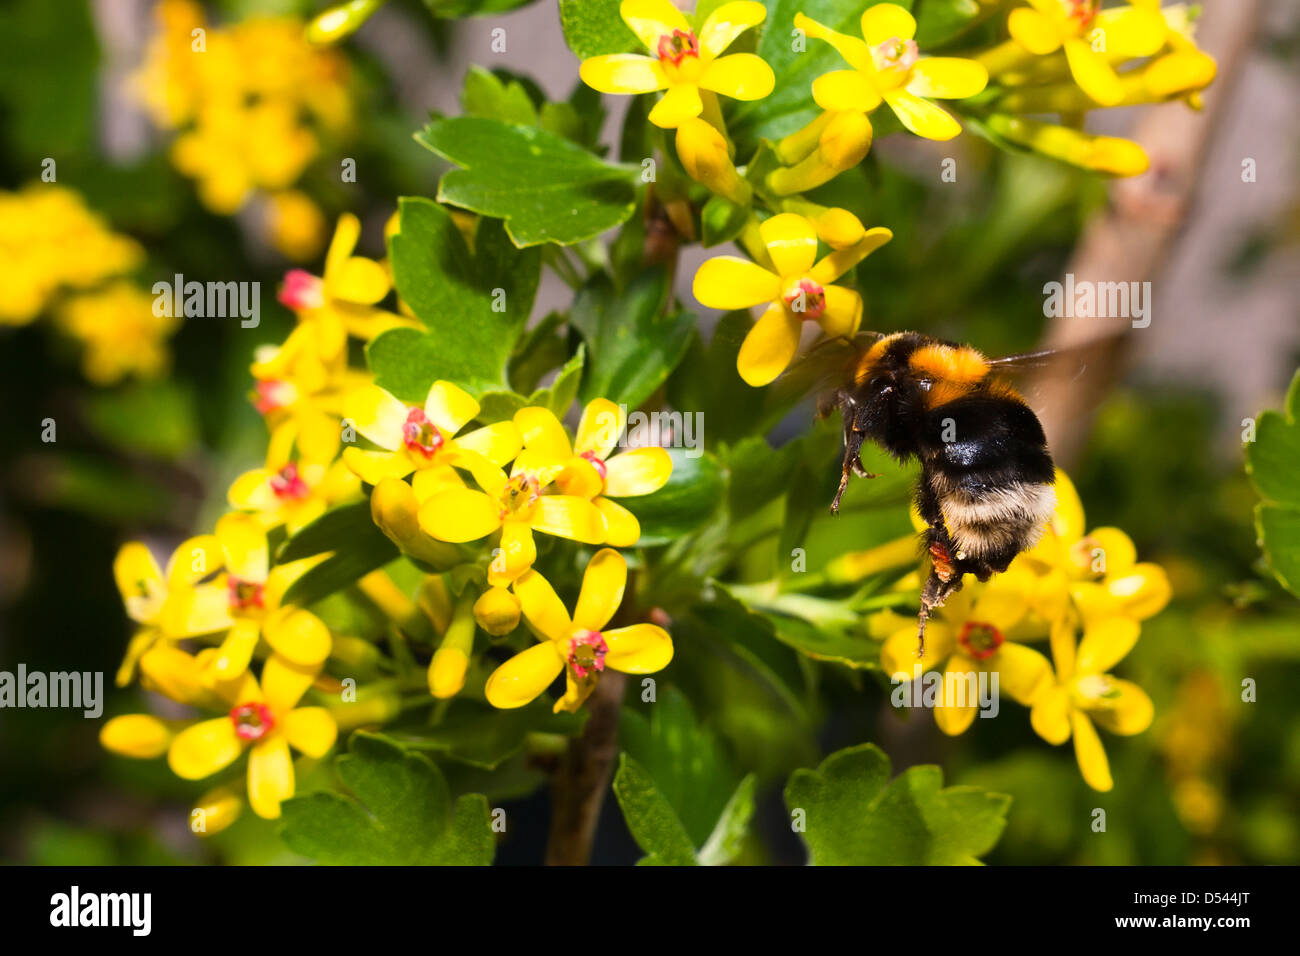 Bumble Bee in volo con luminosi fiori gialli Foto Stock